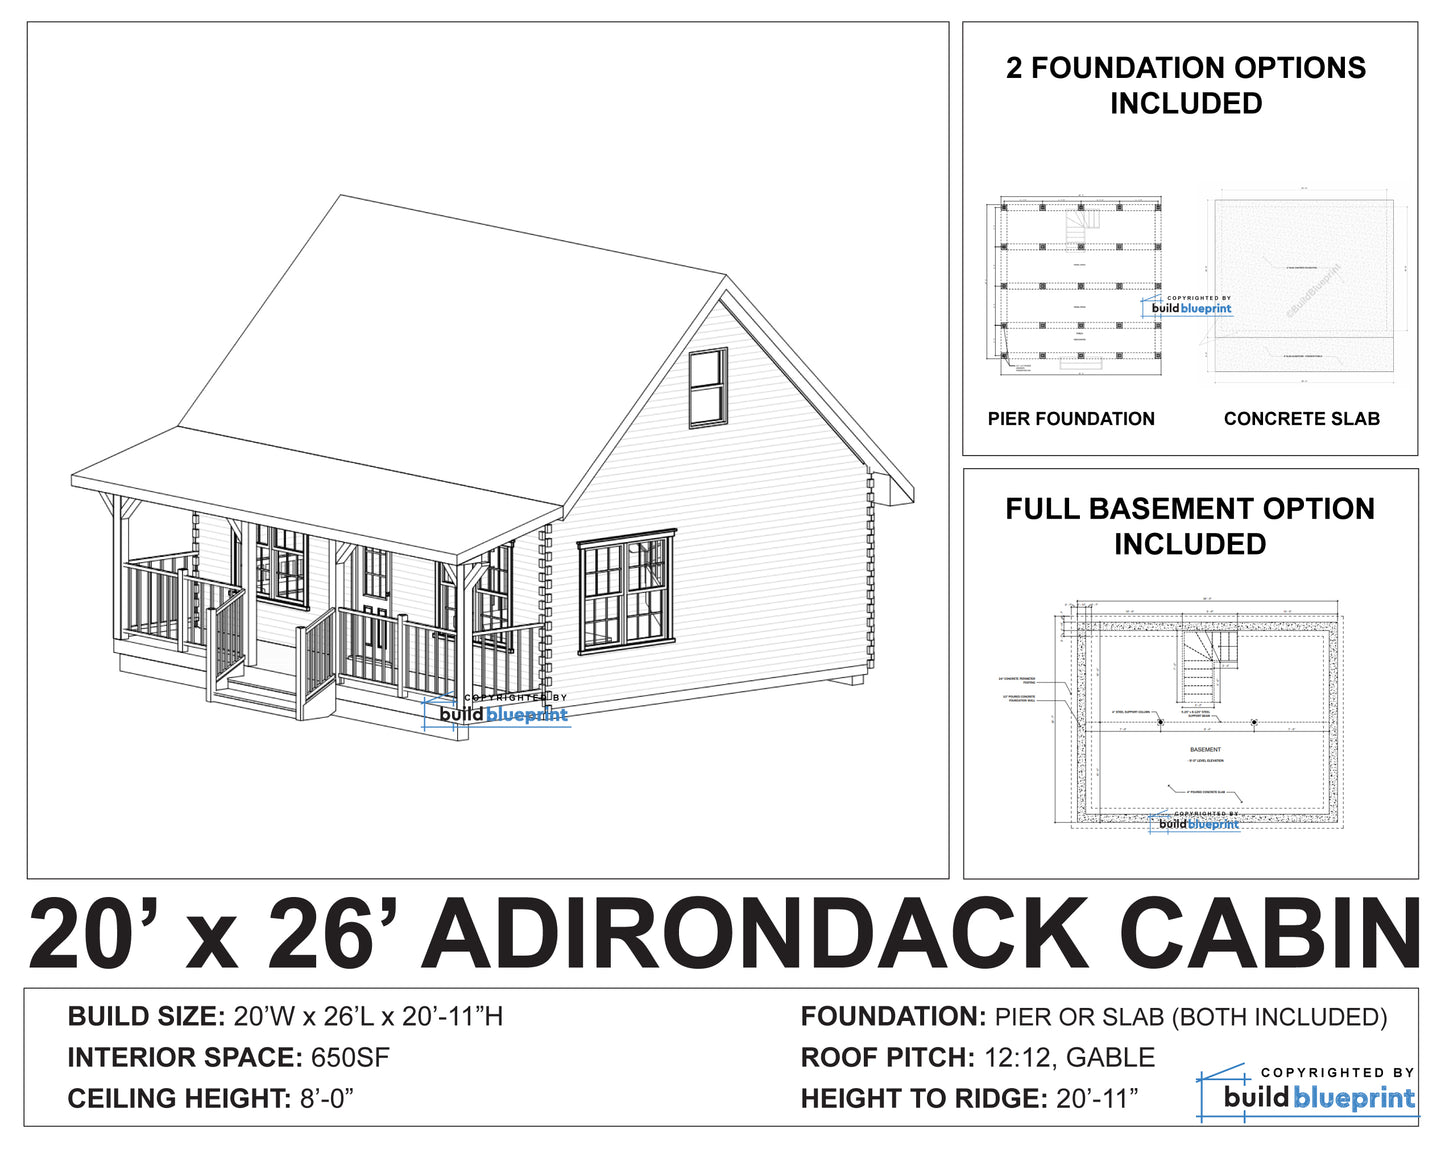 20' x 26' Adirondack Cabin Architectural Plans